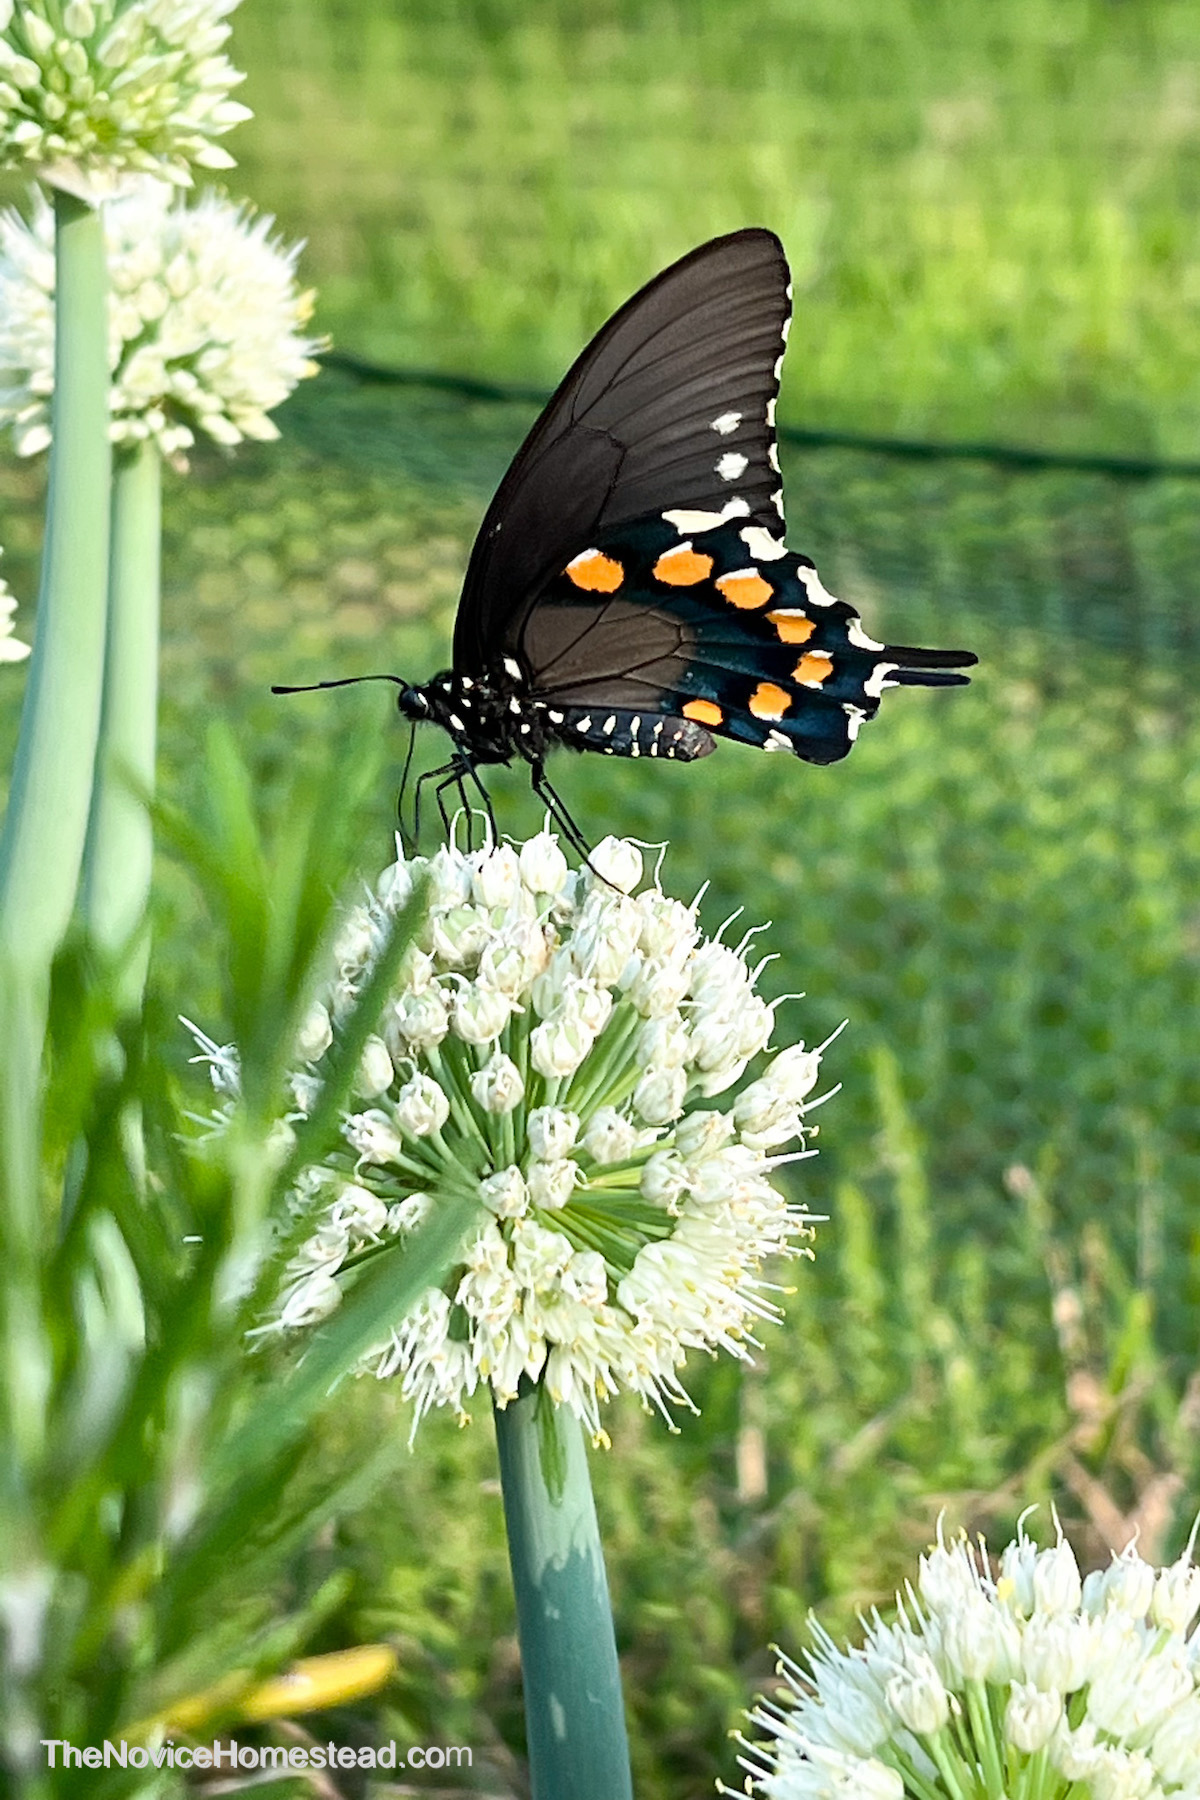 Swallowtail Butterfly on top of green onion flowers